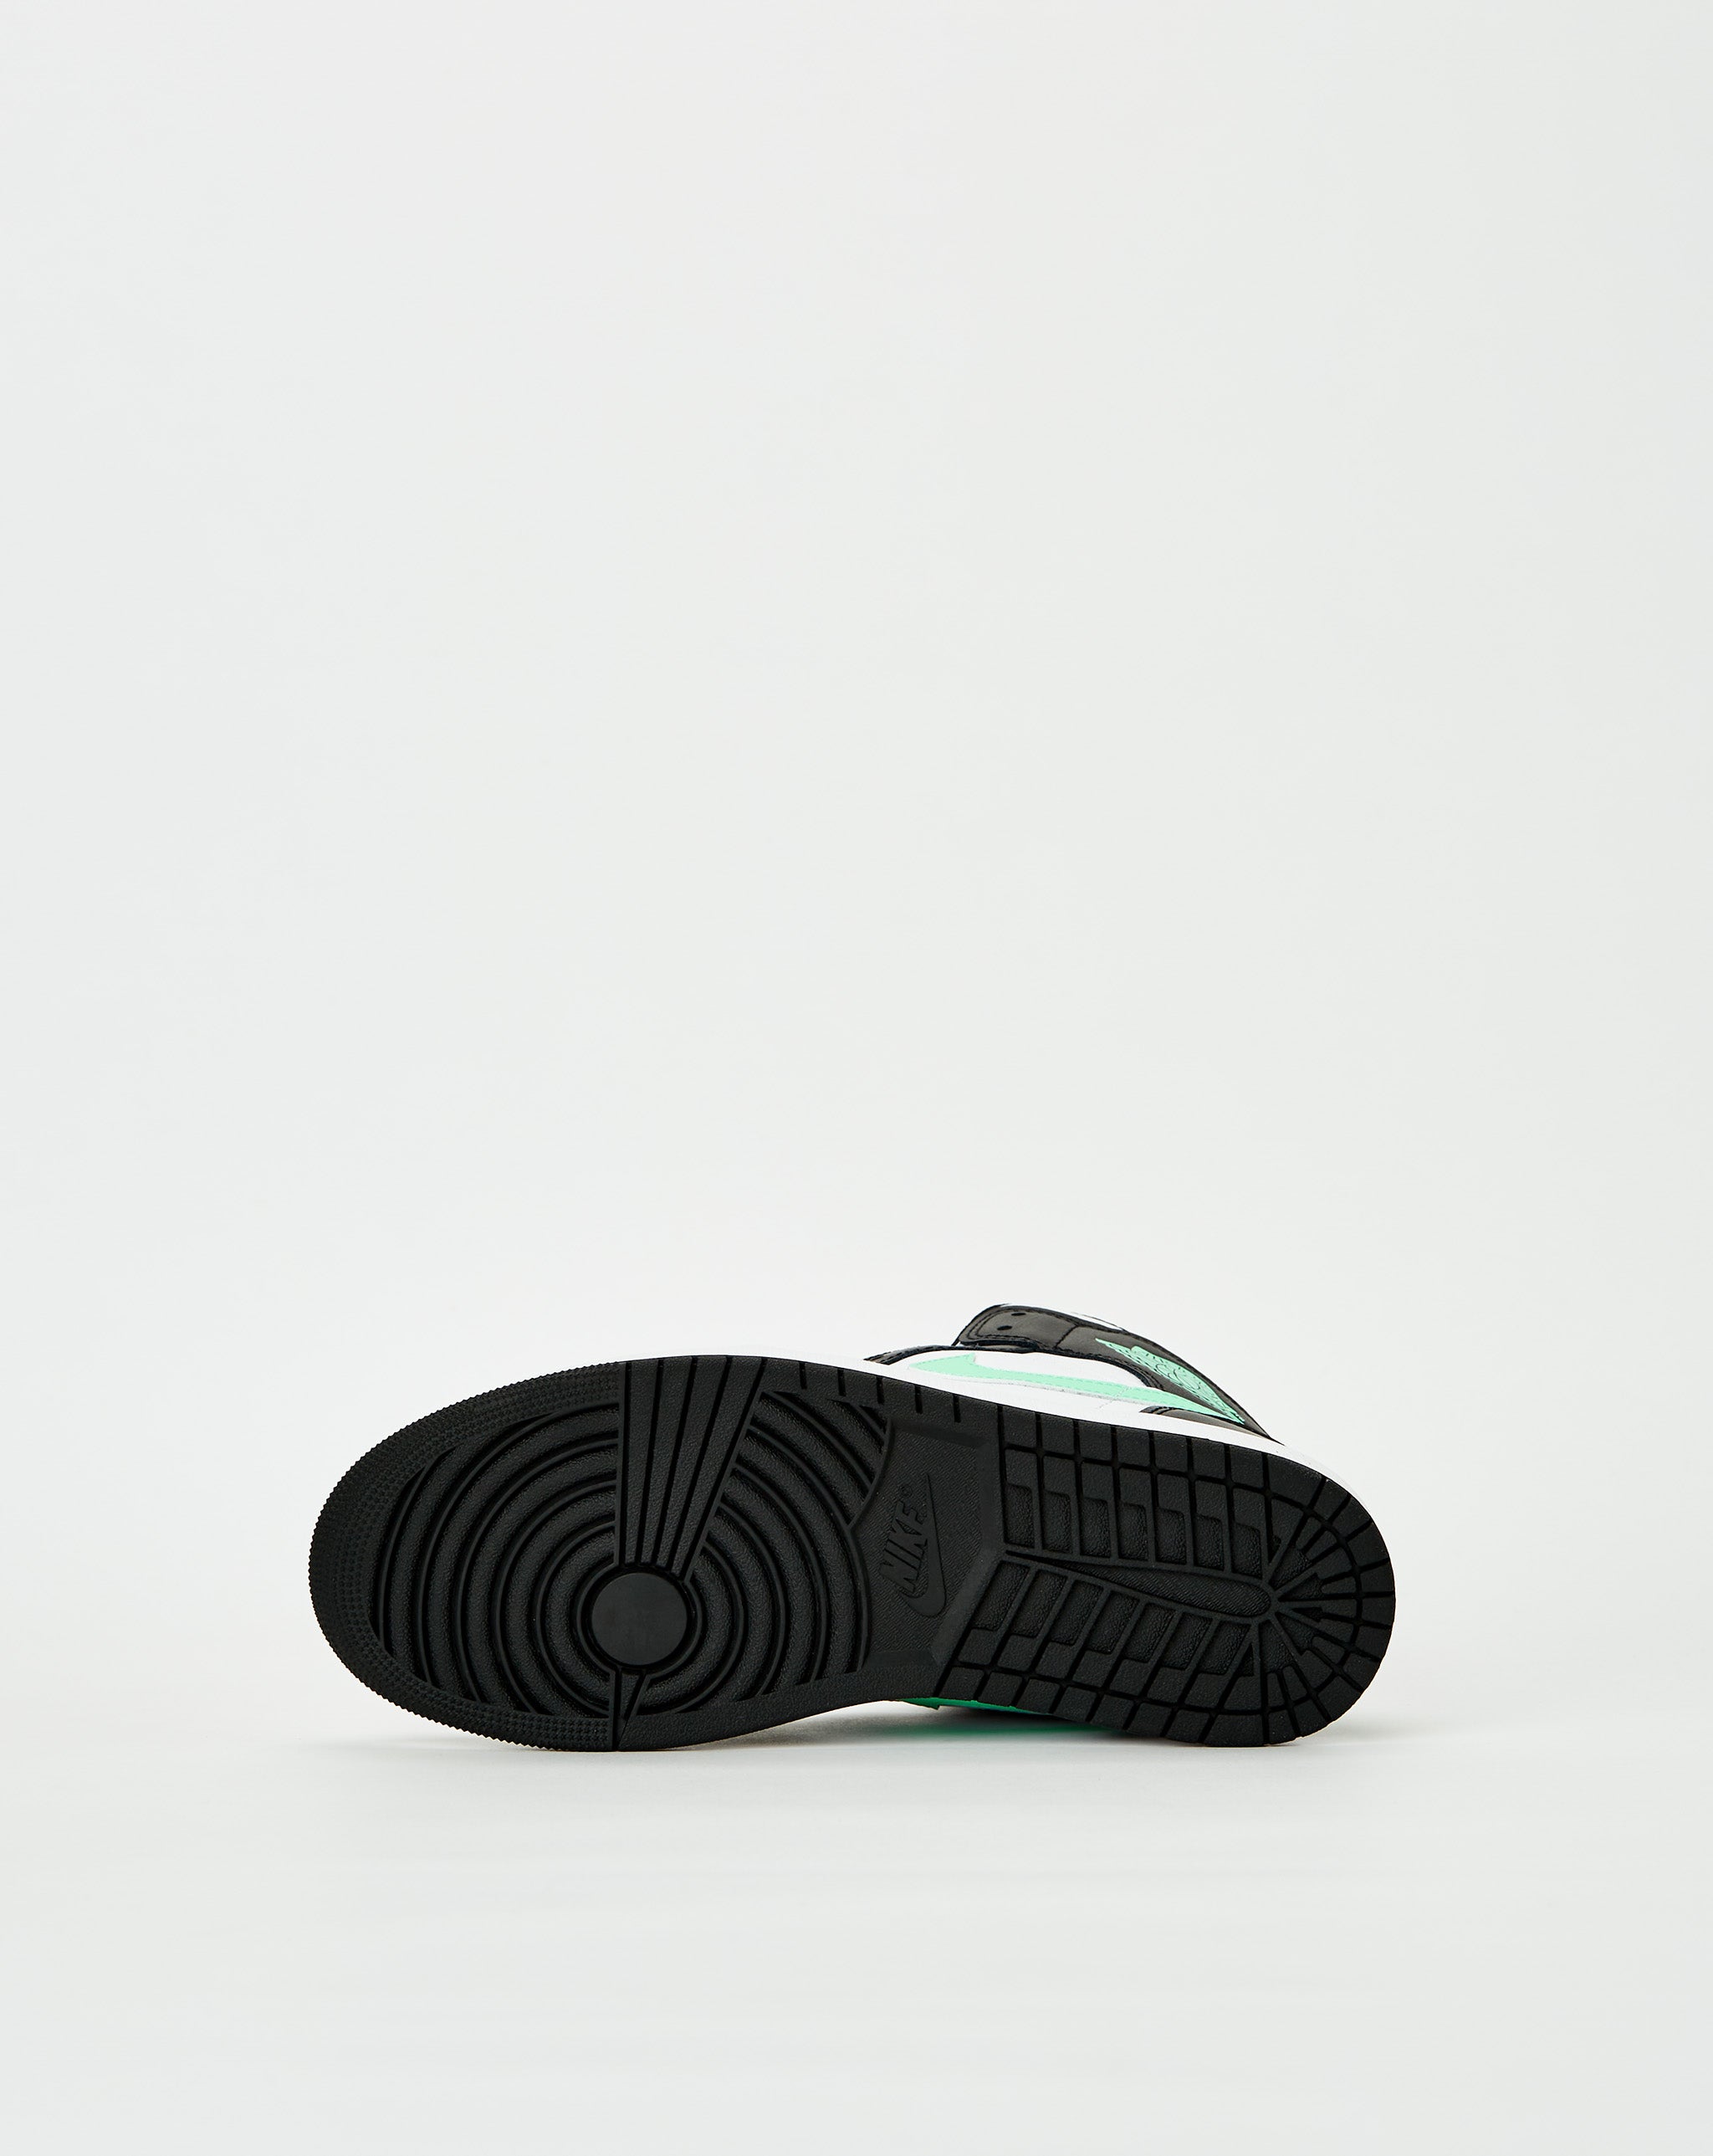 Air Jordan Nike Air Jordan 11 Retro Low Green Snakeskin 528895-033  - Cheap Urlfreeze Jordan outlet